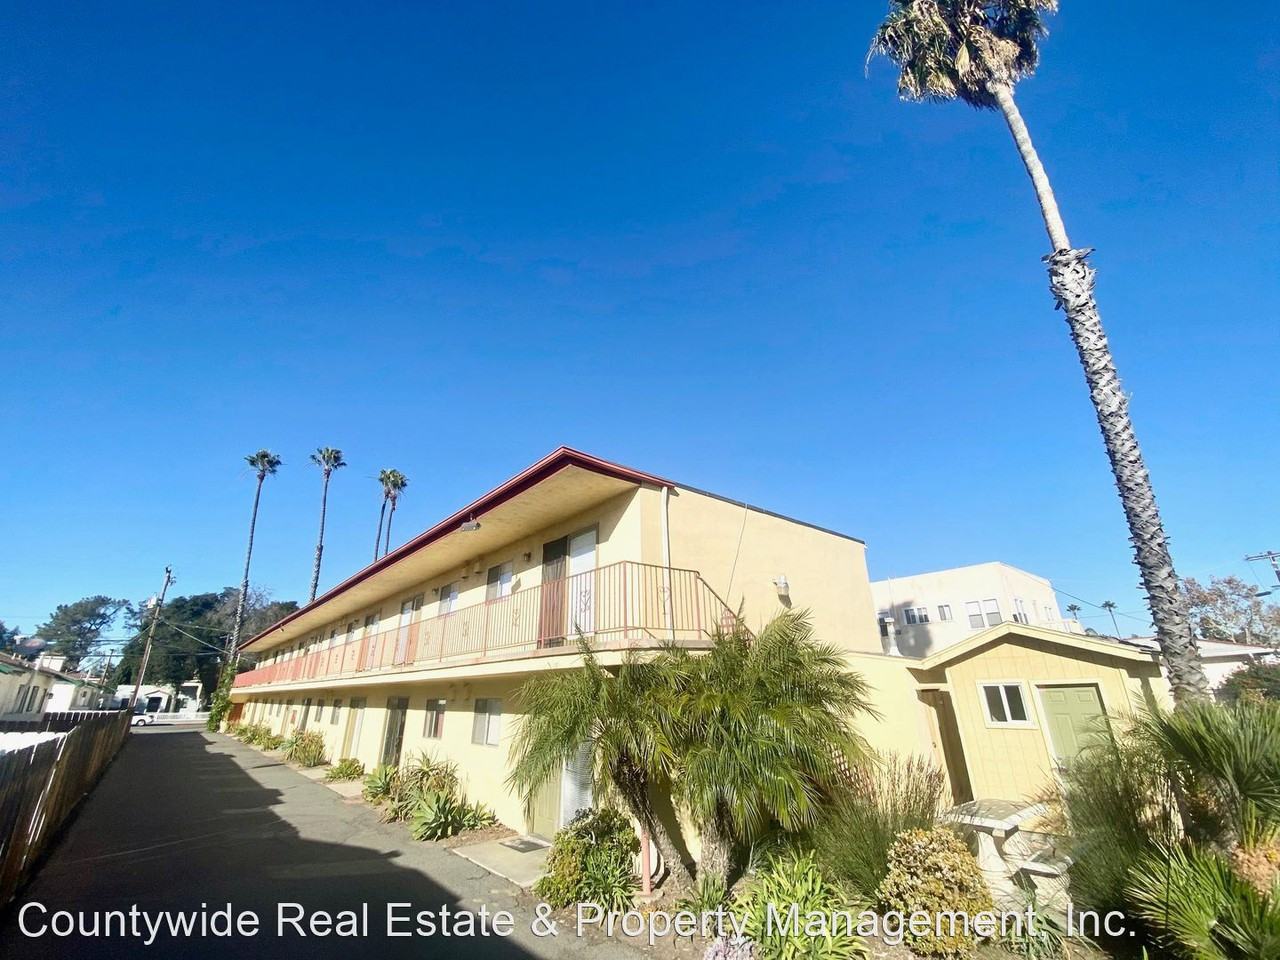 318 G St Apartments in Central Chula Vista, Chula Vista, CA 91910 - Zumper